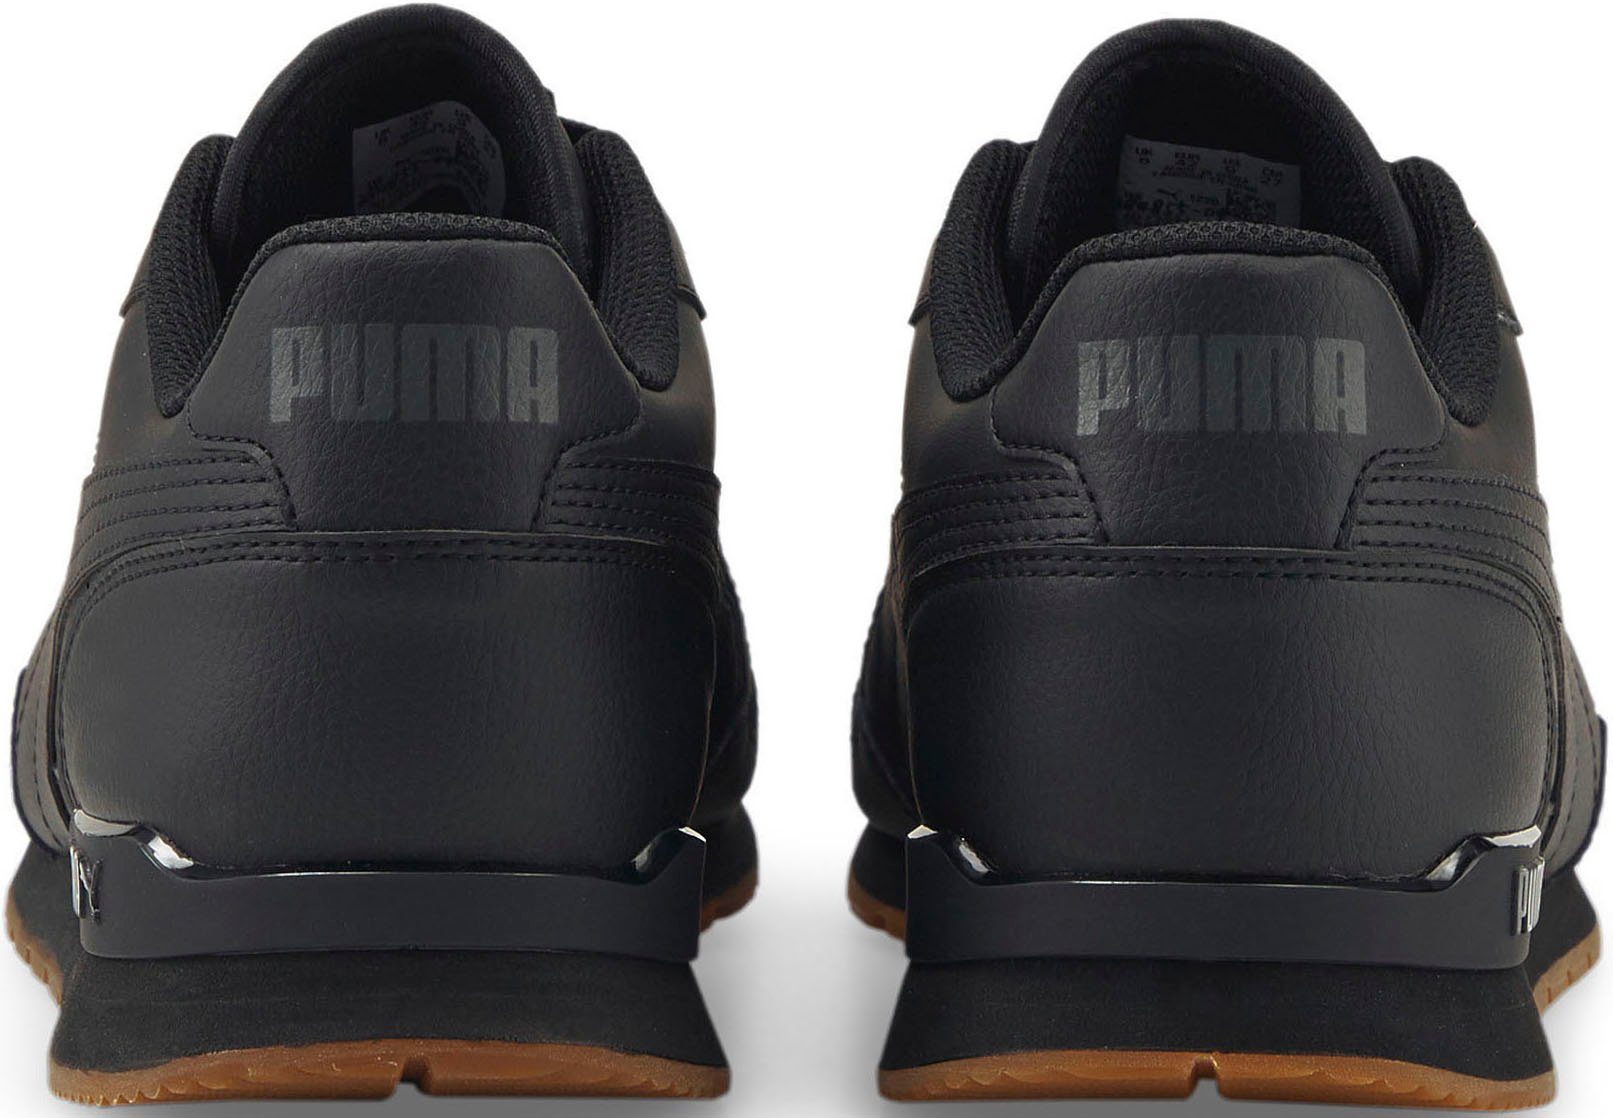 PUMA ST L Runner v3 schwarz-braun Sneaker